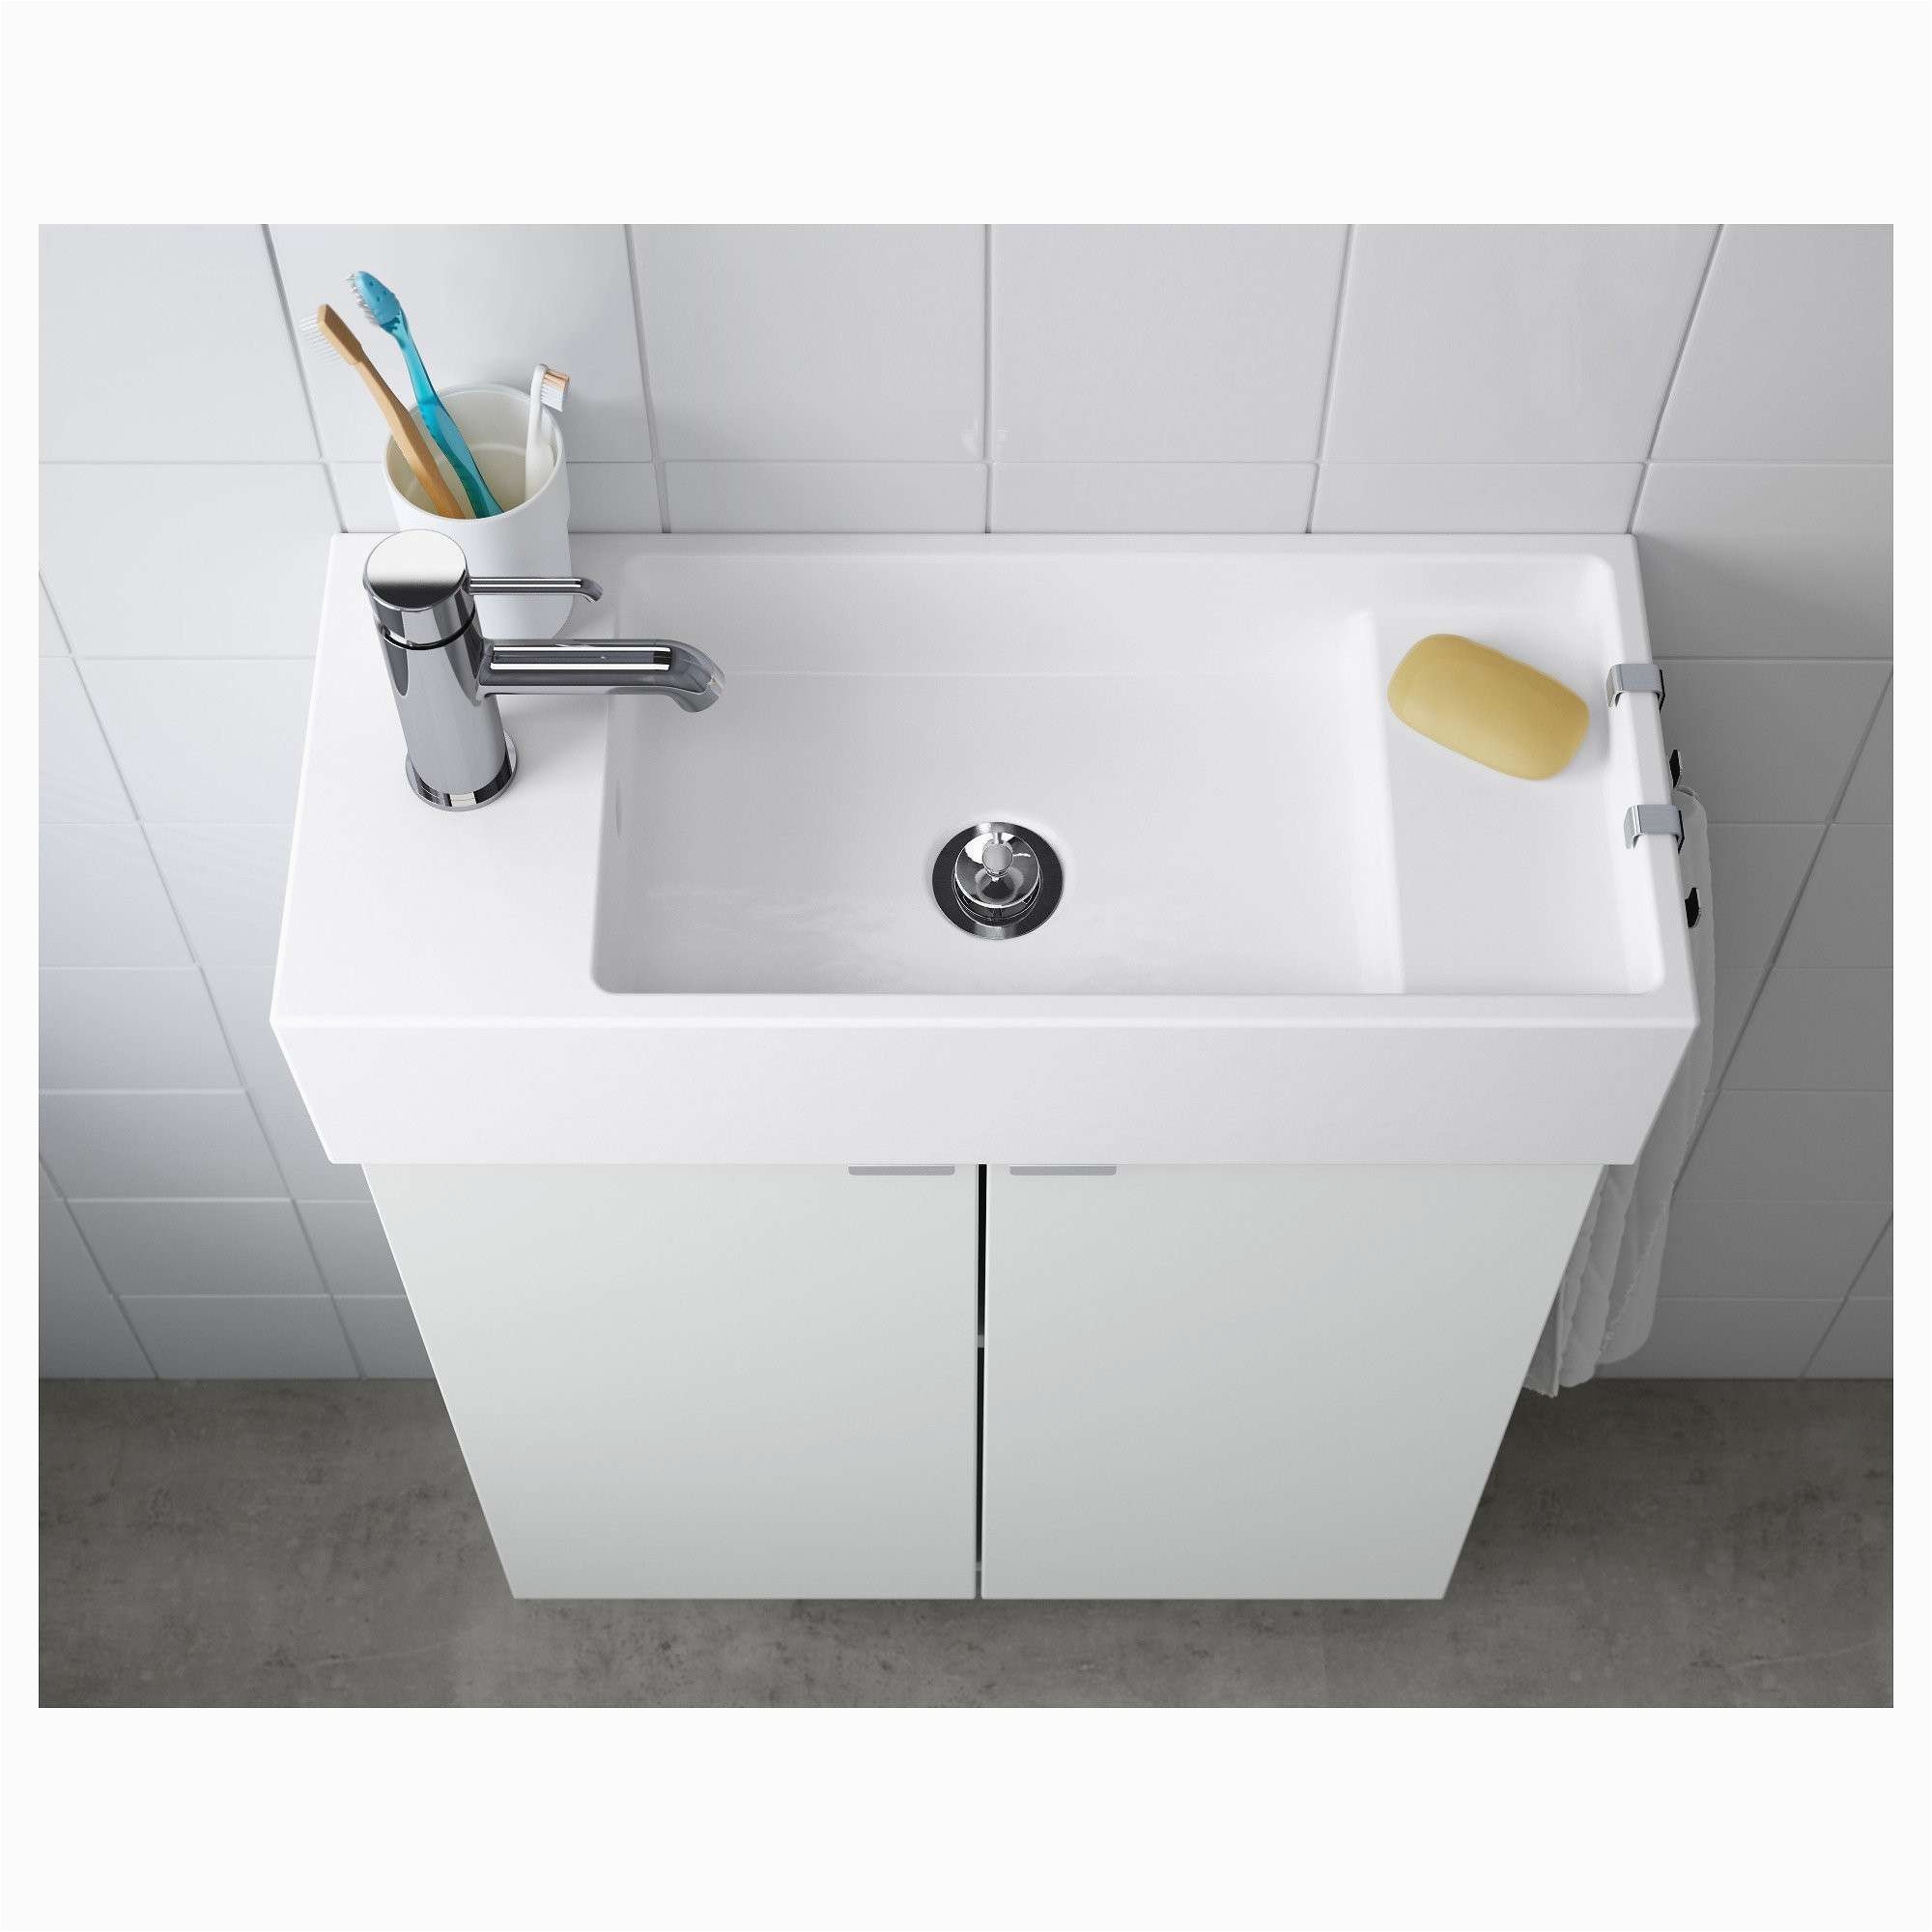 Tiny Bathroom Sink Luxury Bathroom Sinks and Cabinets Ideas Pe S5h Sink Ikea Small I 0d